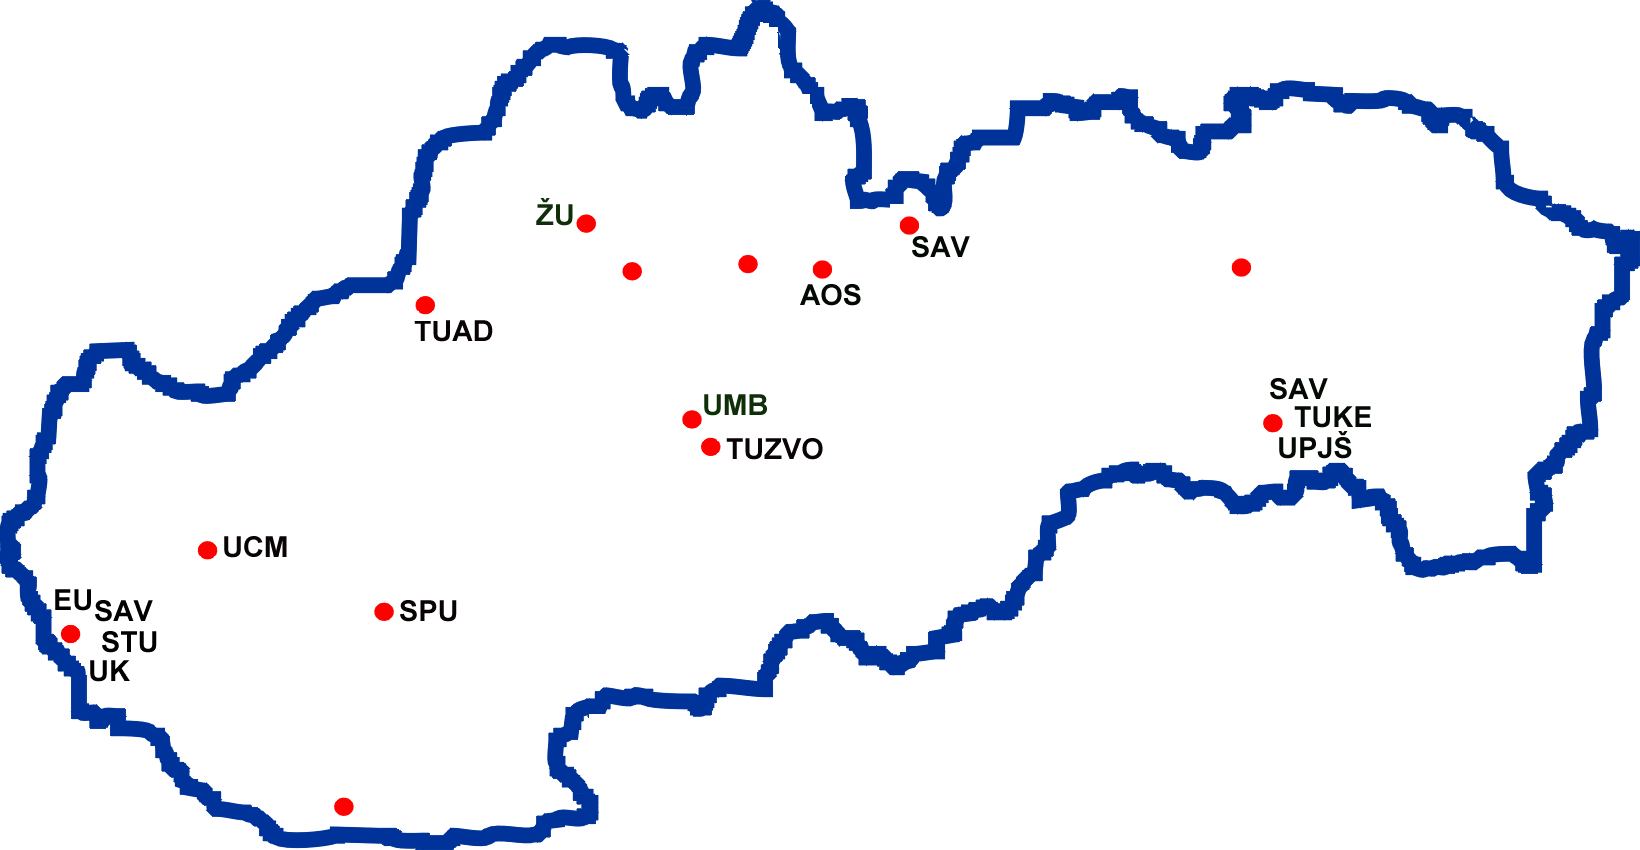 Slovak grid infrastructure